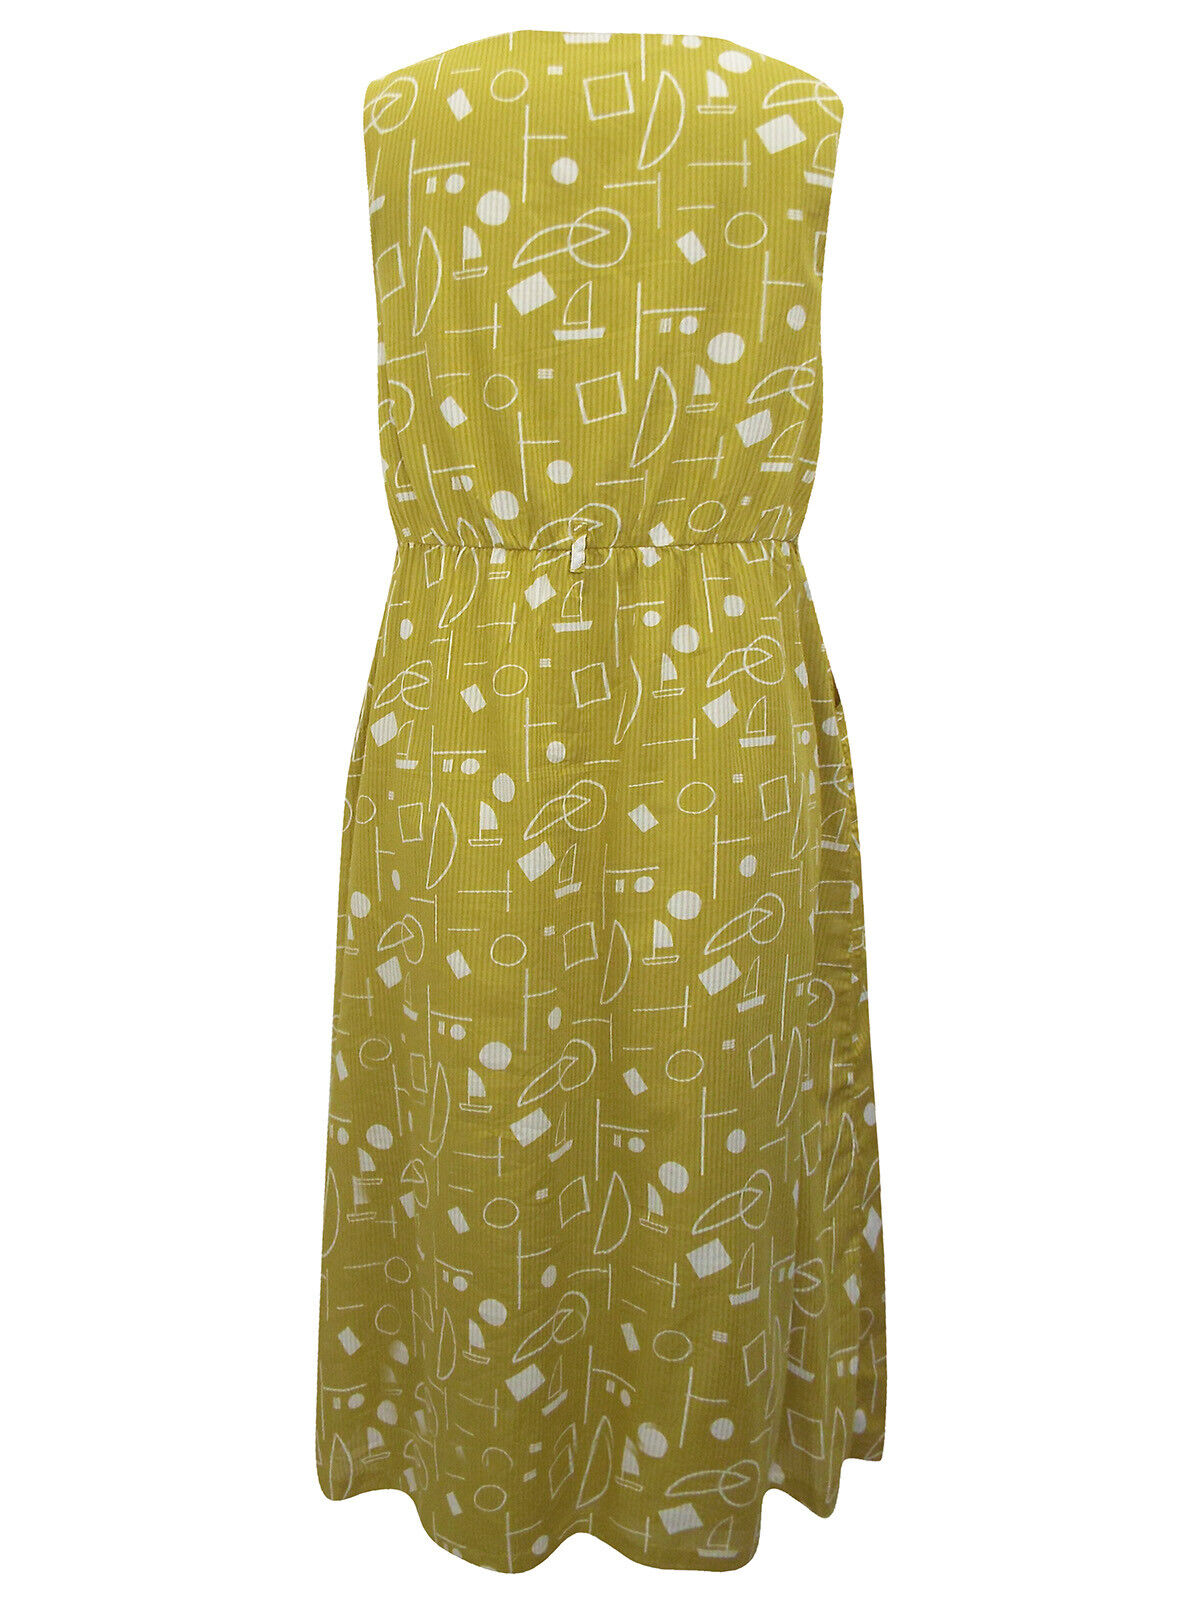 EX SEASALT Green Linear Shapes Catkin Seacoast Dress 12, 14, 20 RRP £65 NO BELT